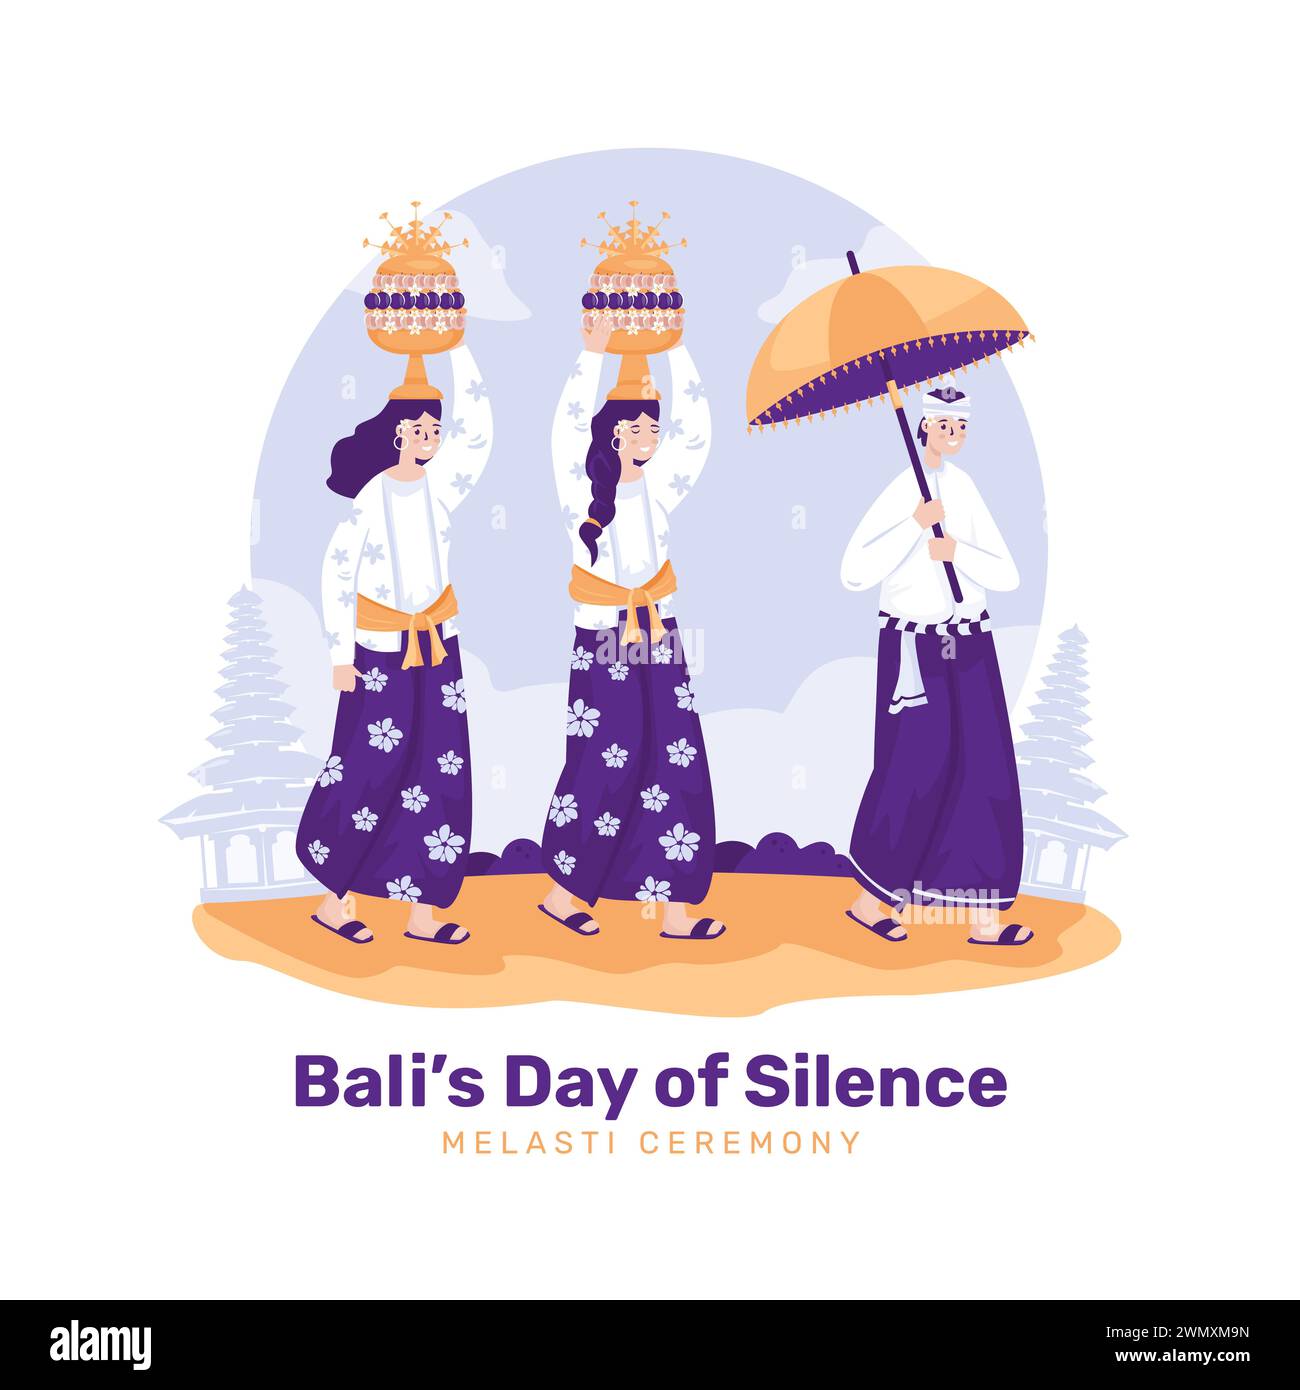 Happy nyepi bali's day of silence with melasti ceremony illustration Stock Vector